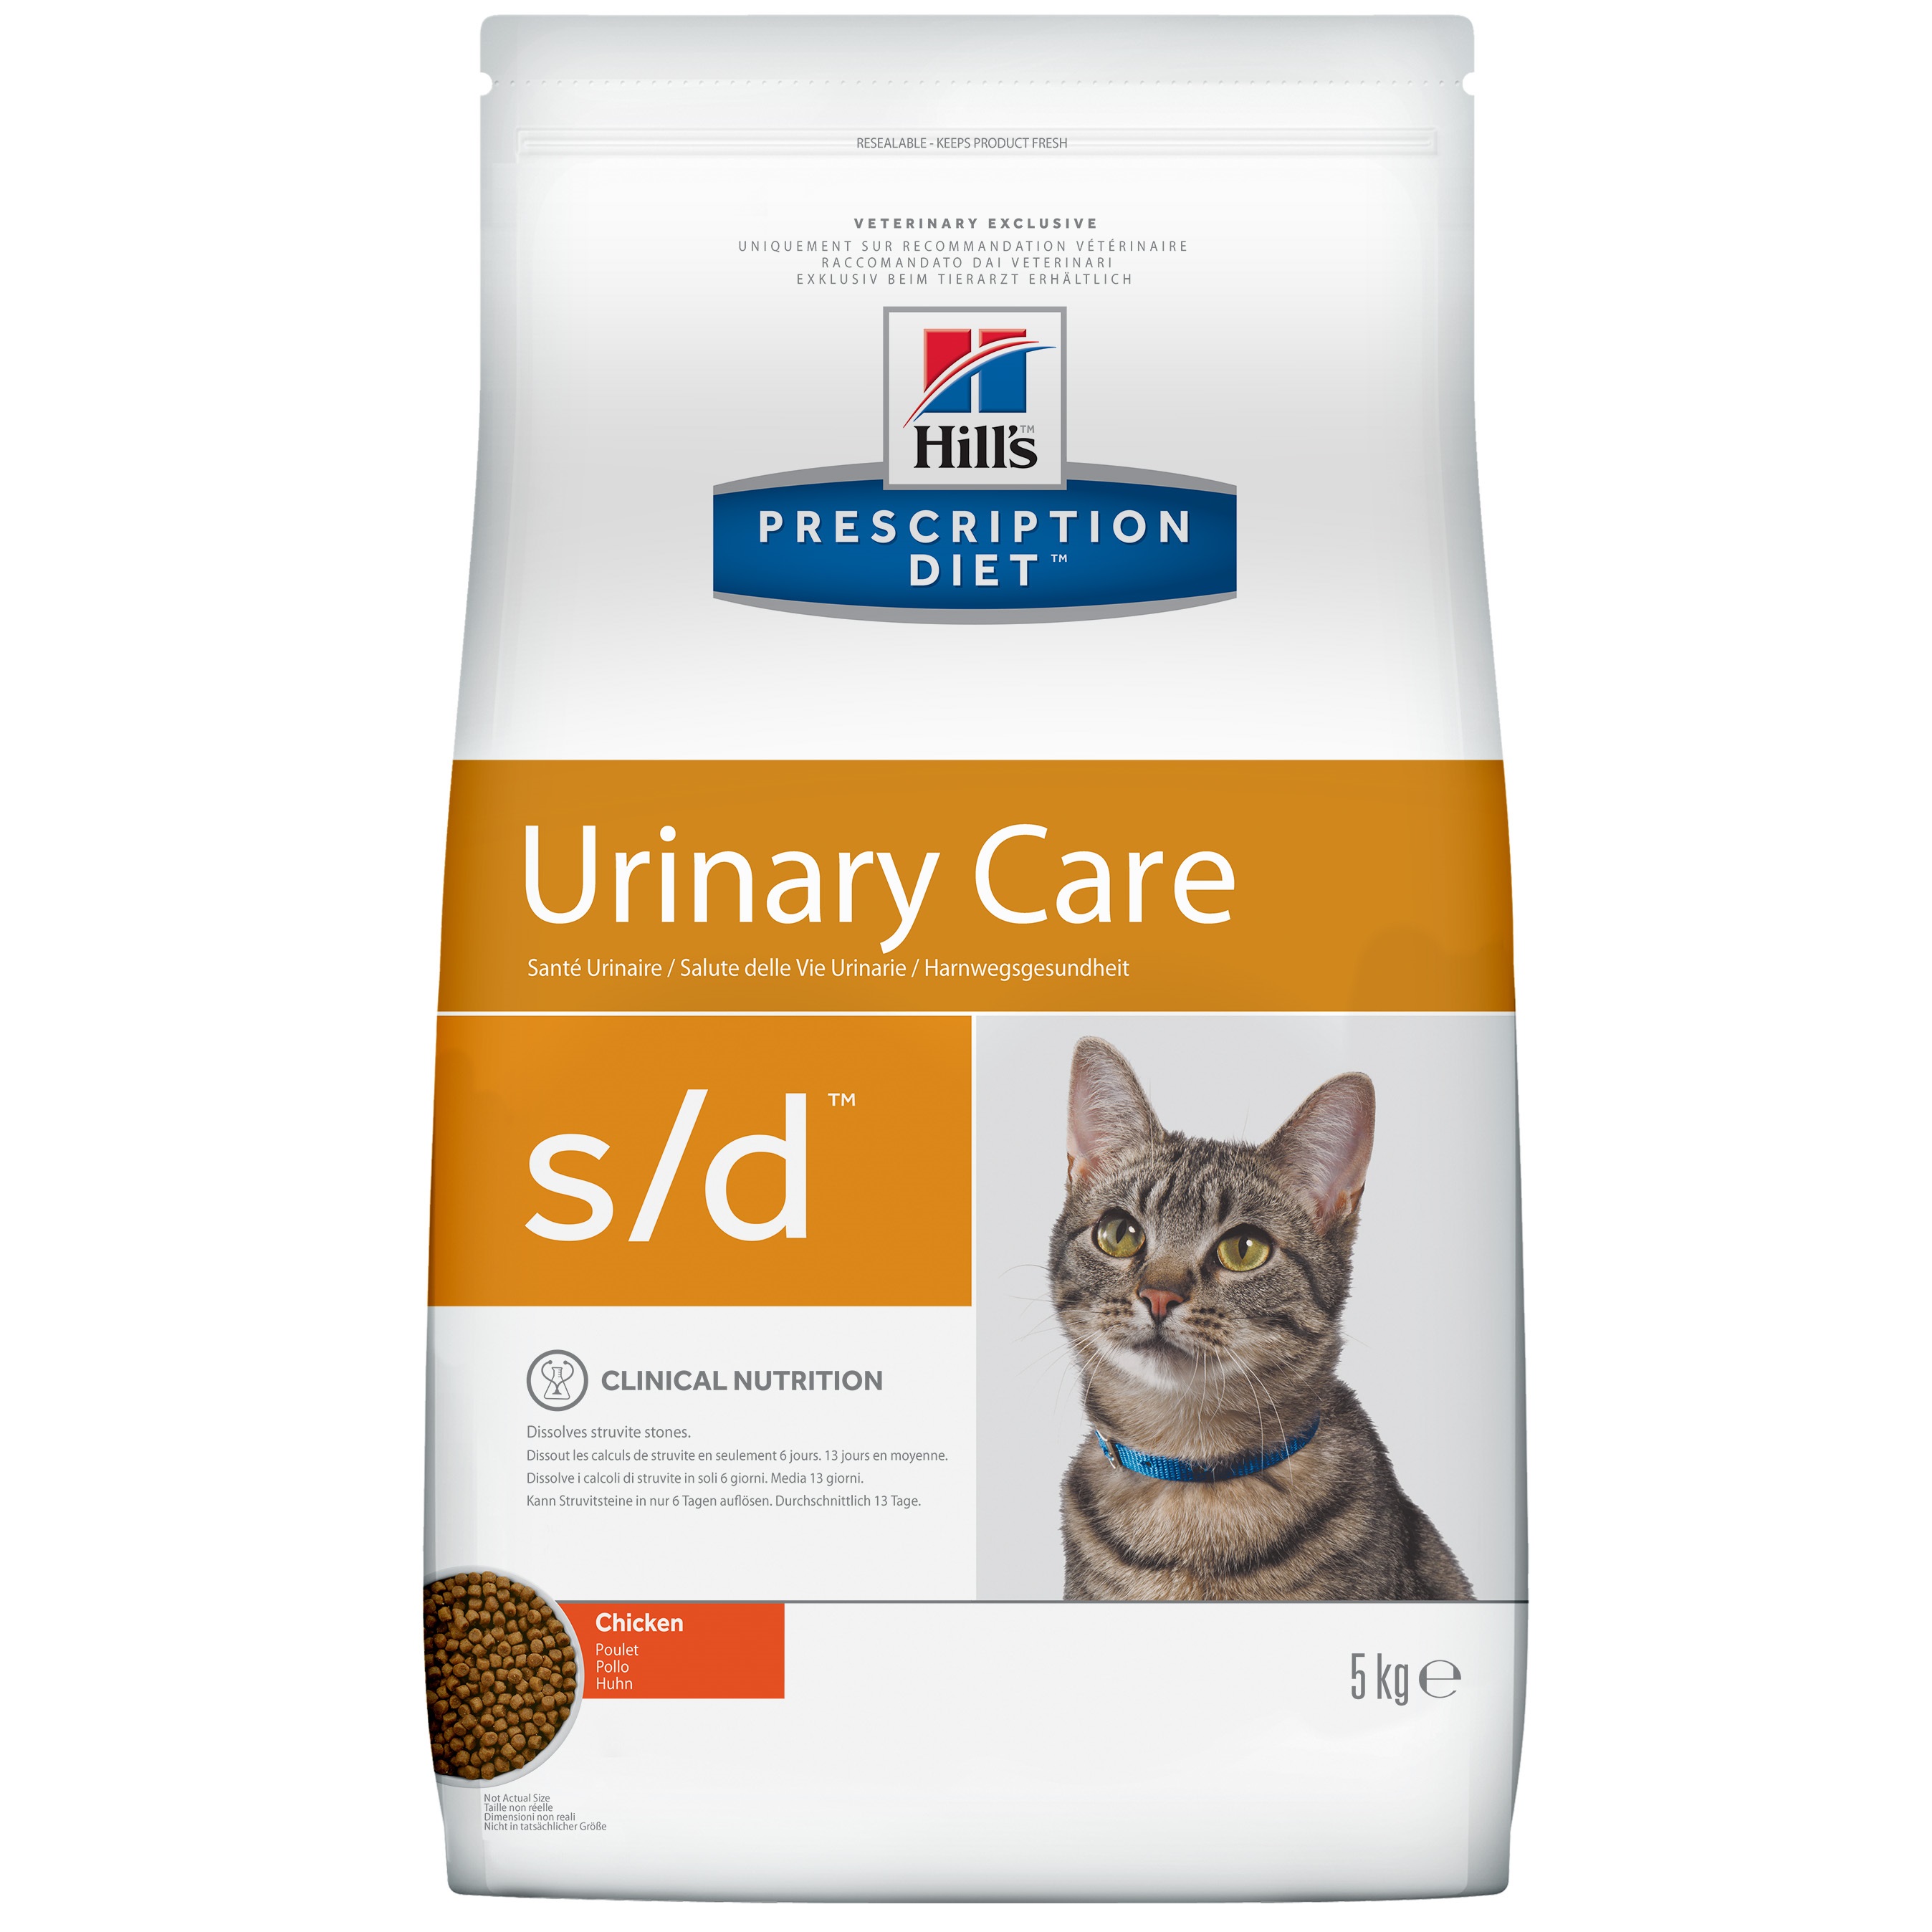 Hill's Prescription Diet s/d Urinary Care сухой корм для кошек, с курицей, 5кг